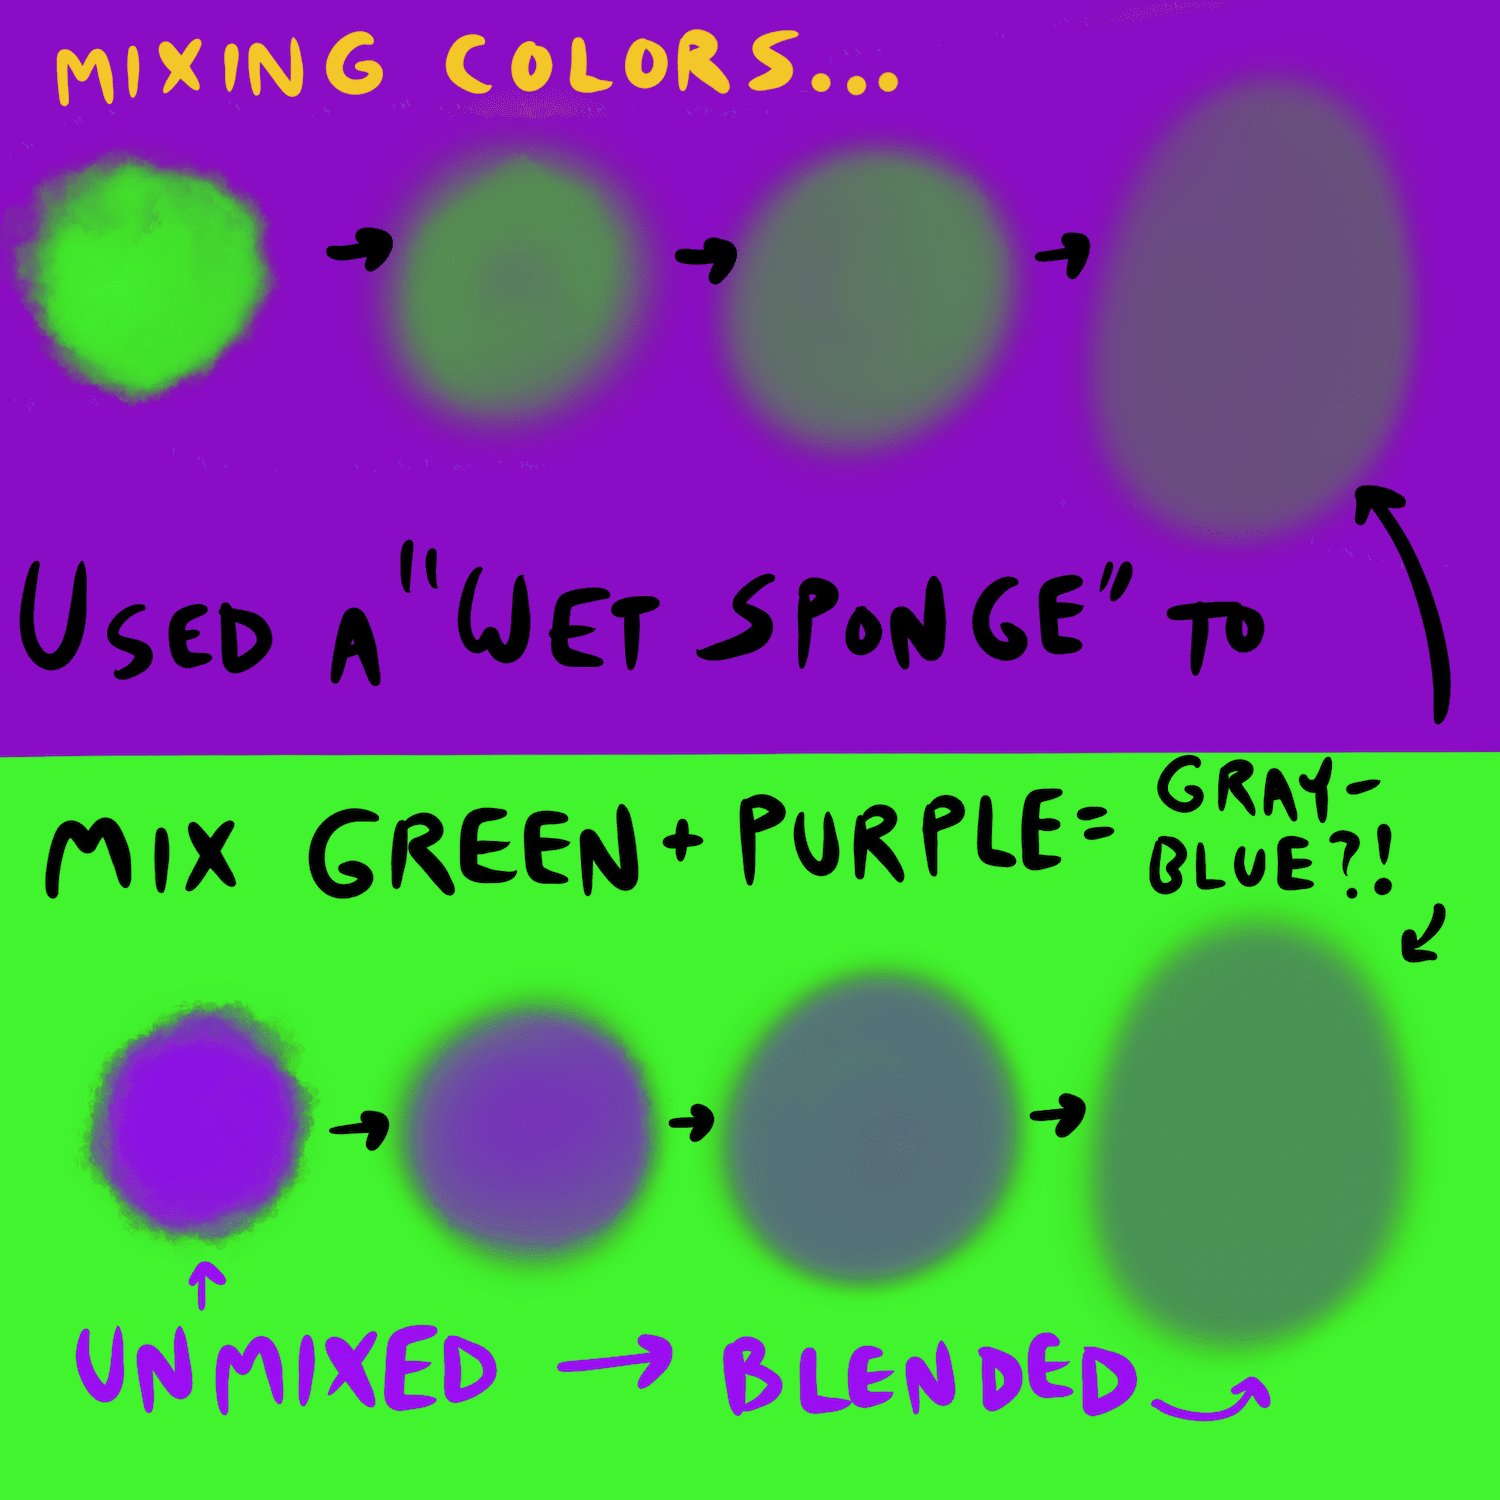 Green plus purple